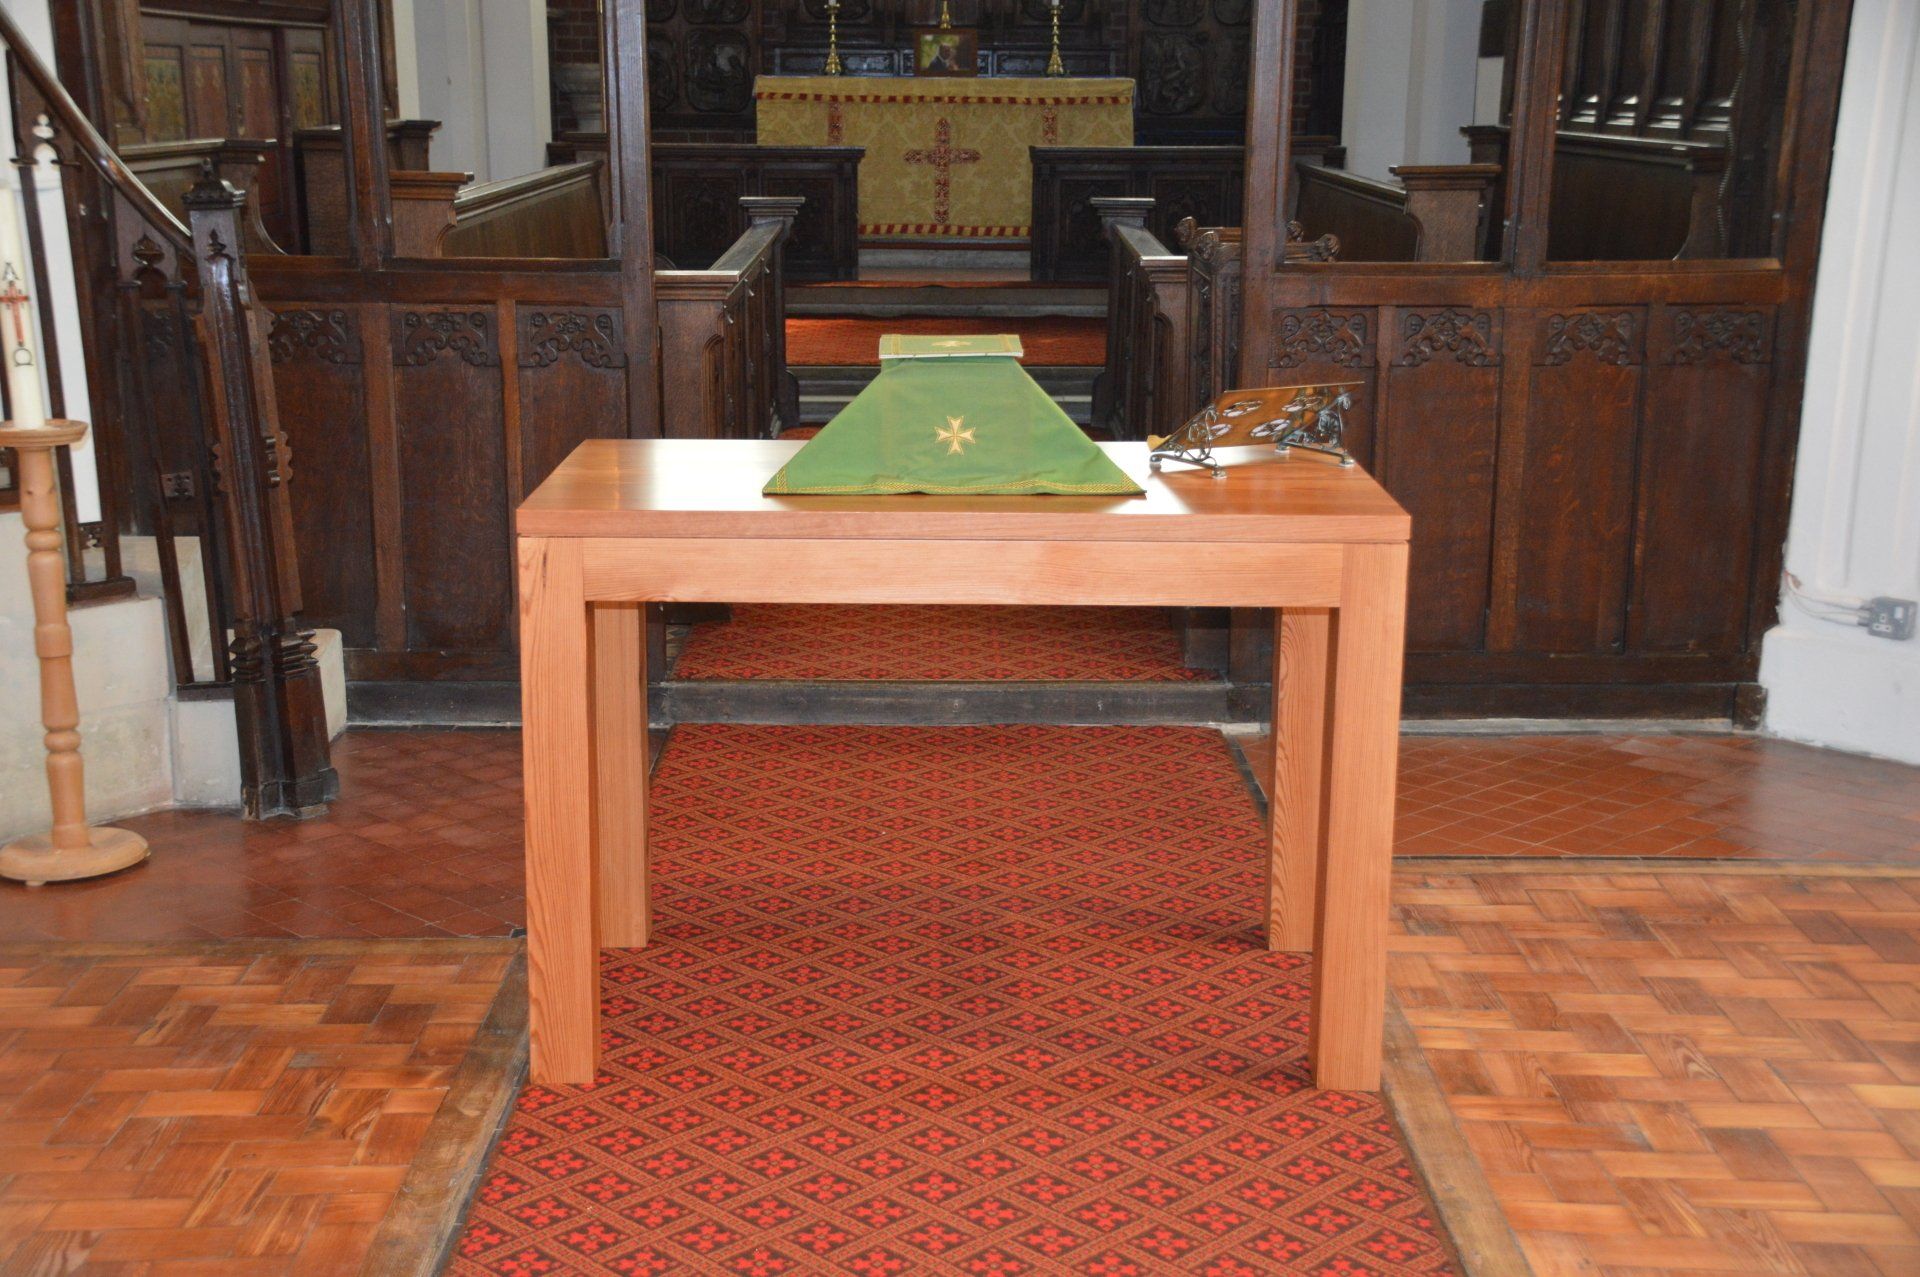 Communion Table, All Saints church